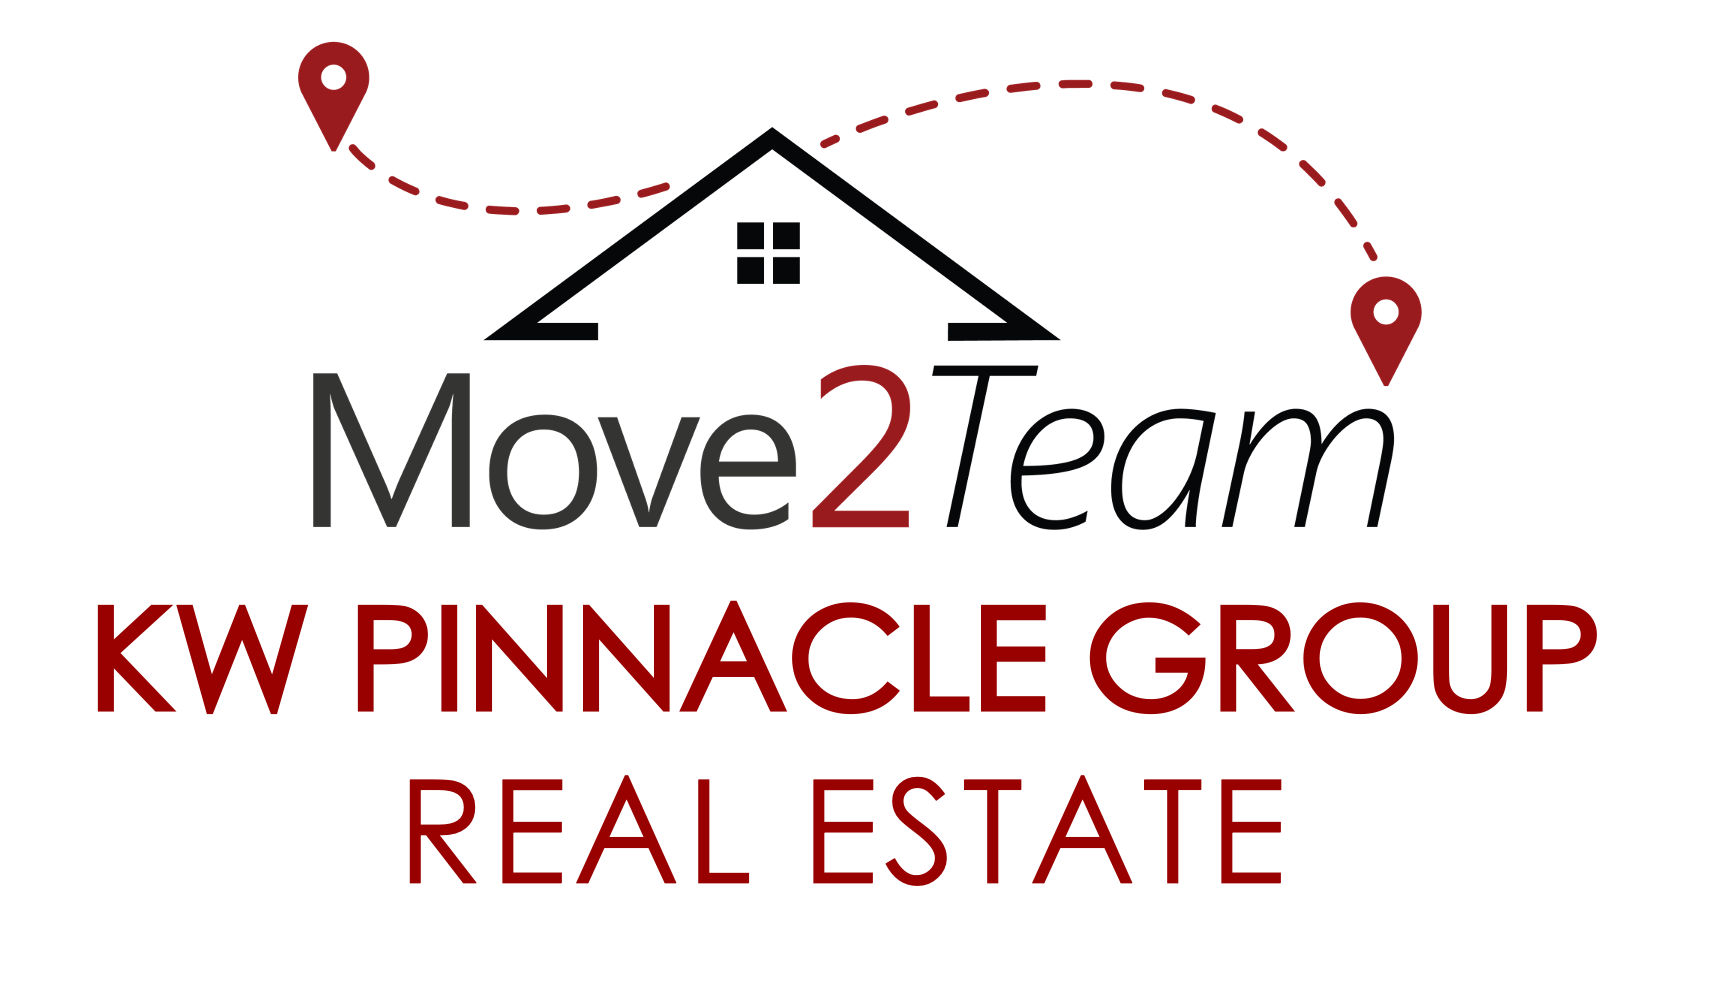 The Move2Team | Keller Williams Pinnacle Group